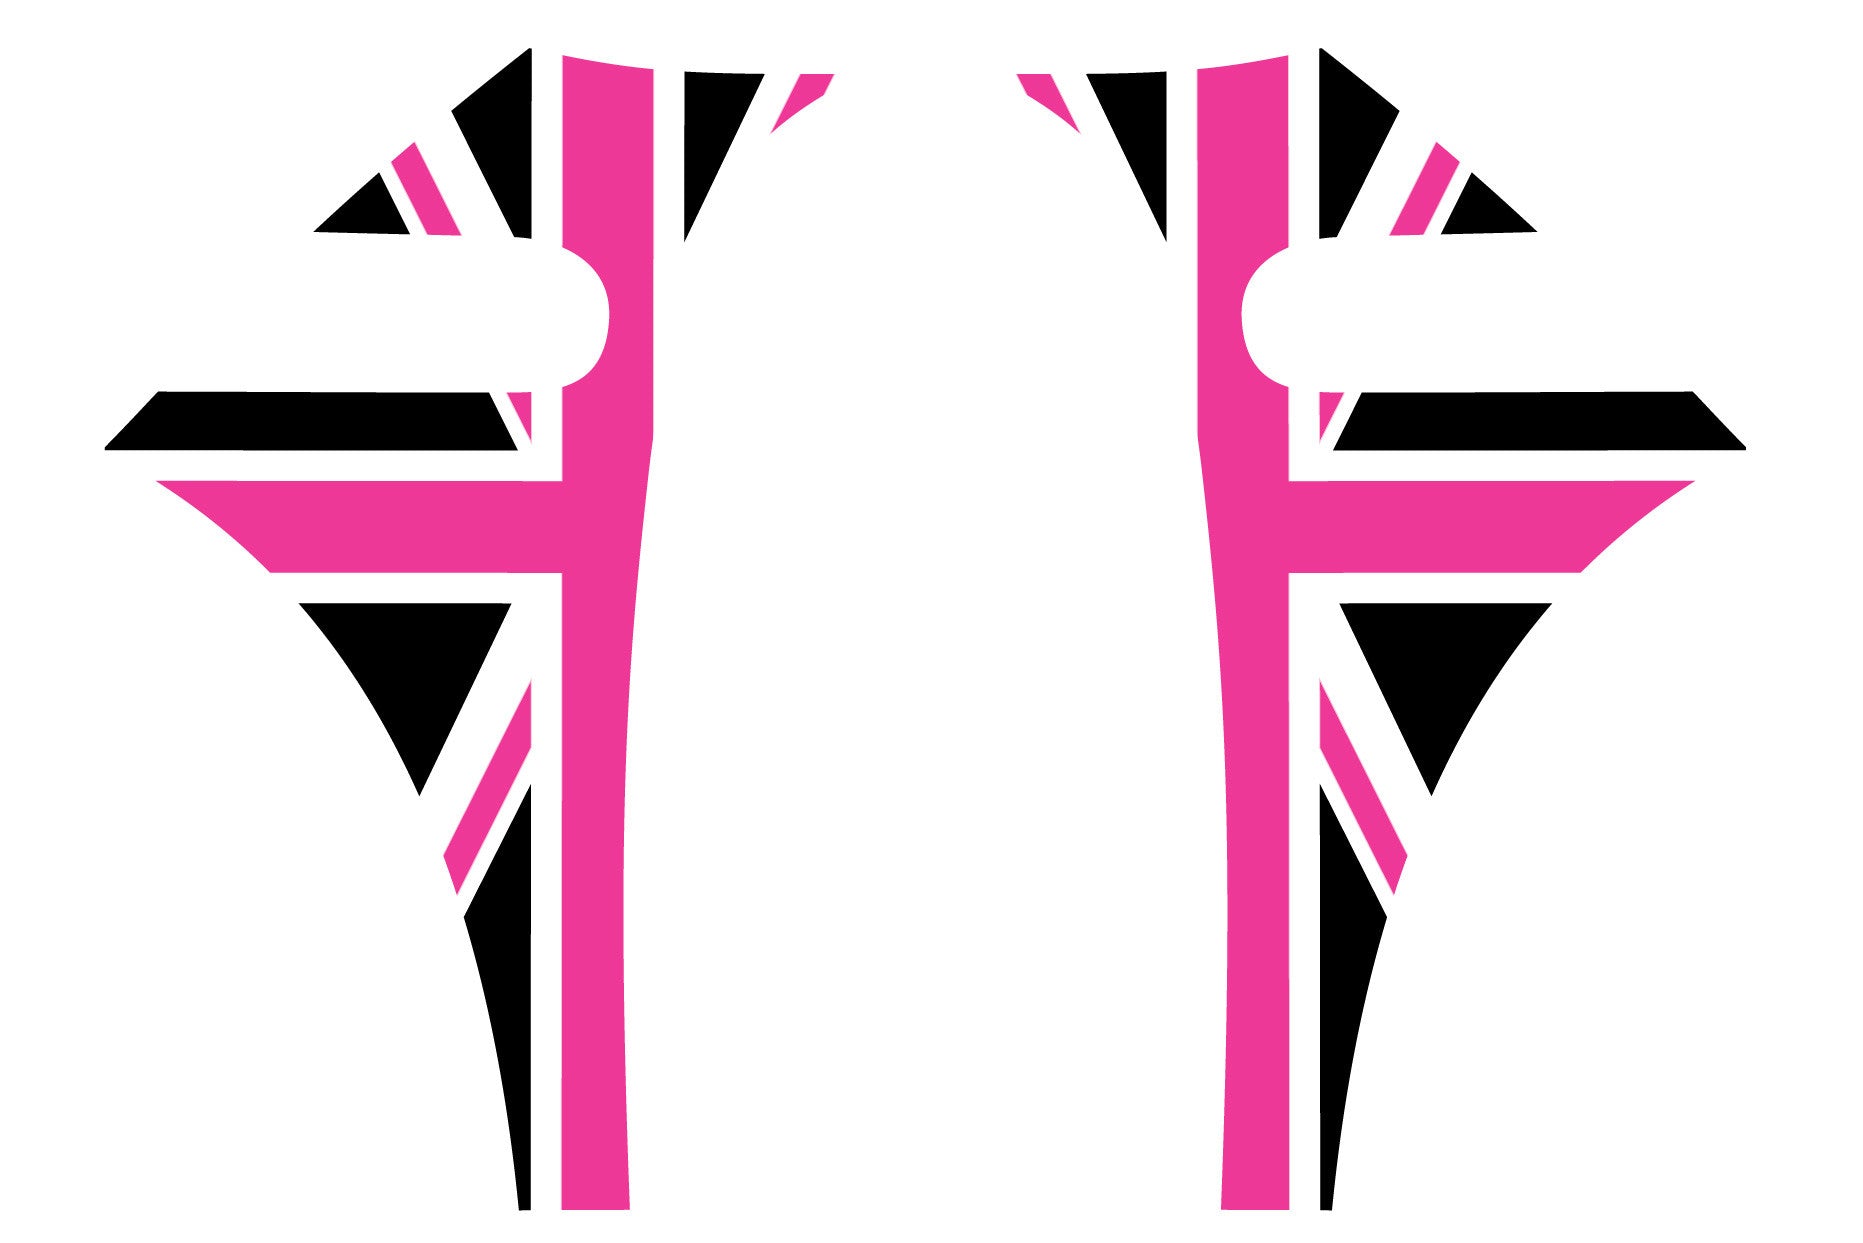 Mini Cooper 2007-2013 Union Jack English Flag A-Panel Hot Pink Black White Decal Kit - Exact Fit